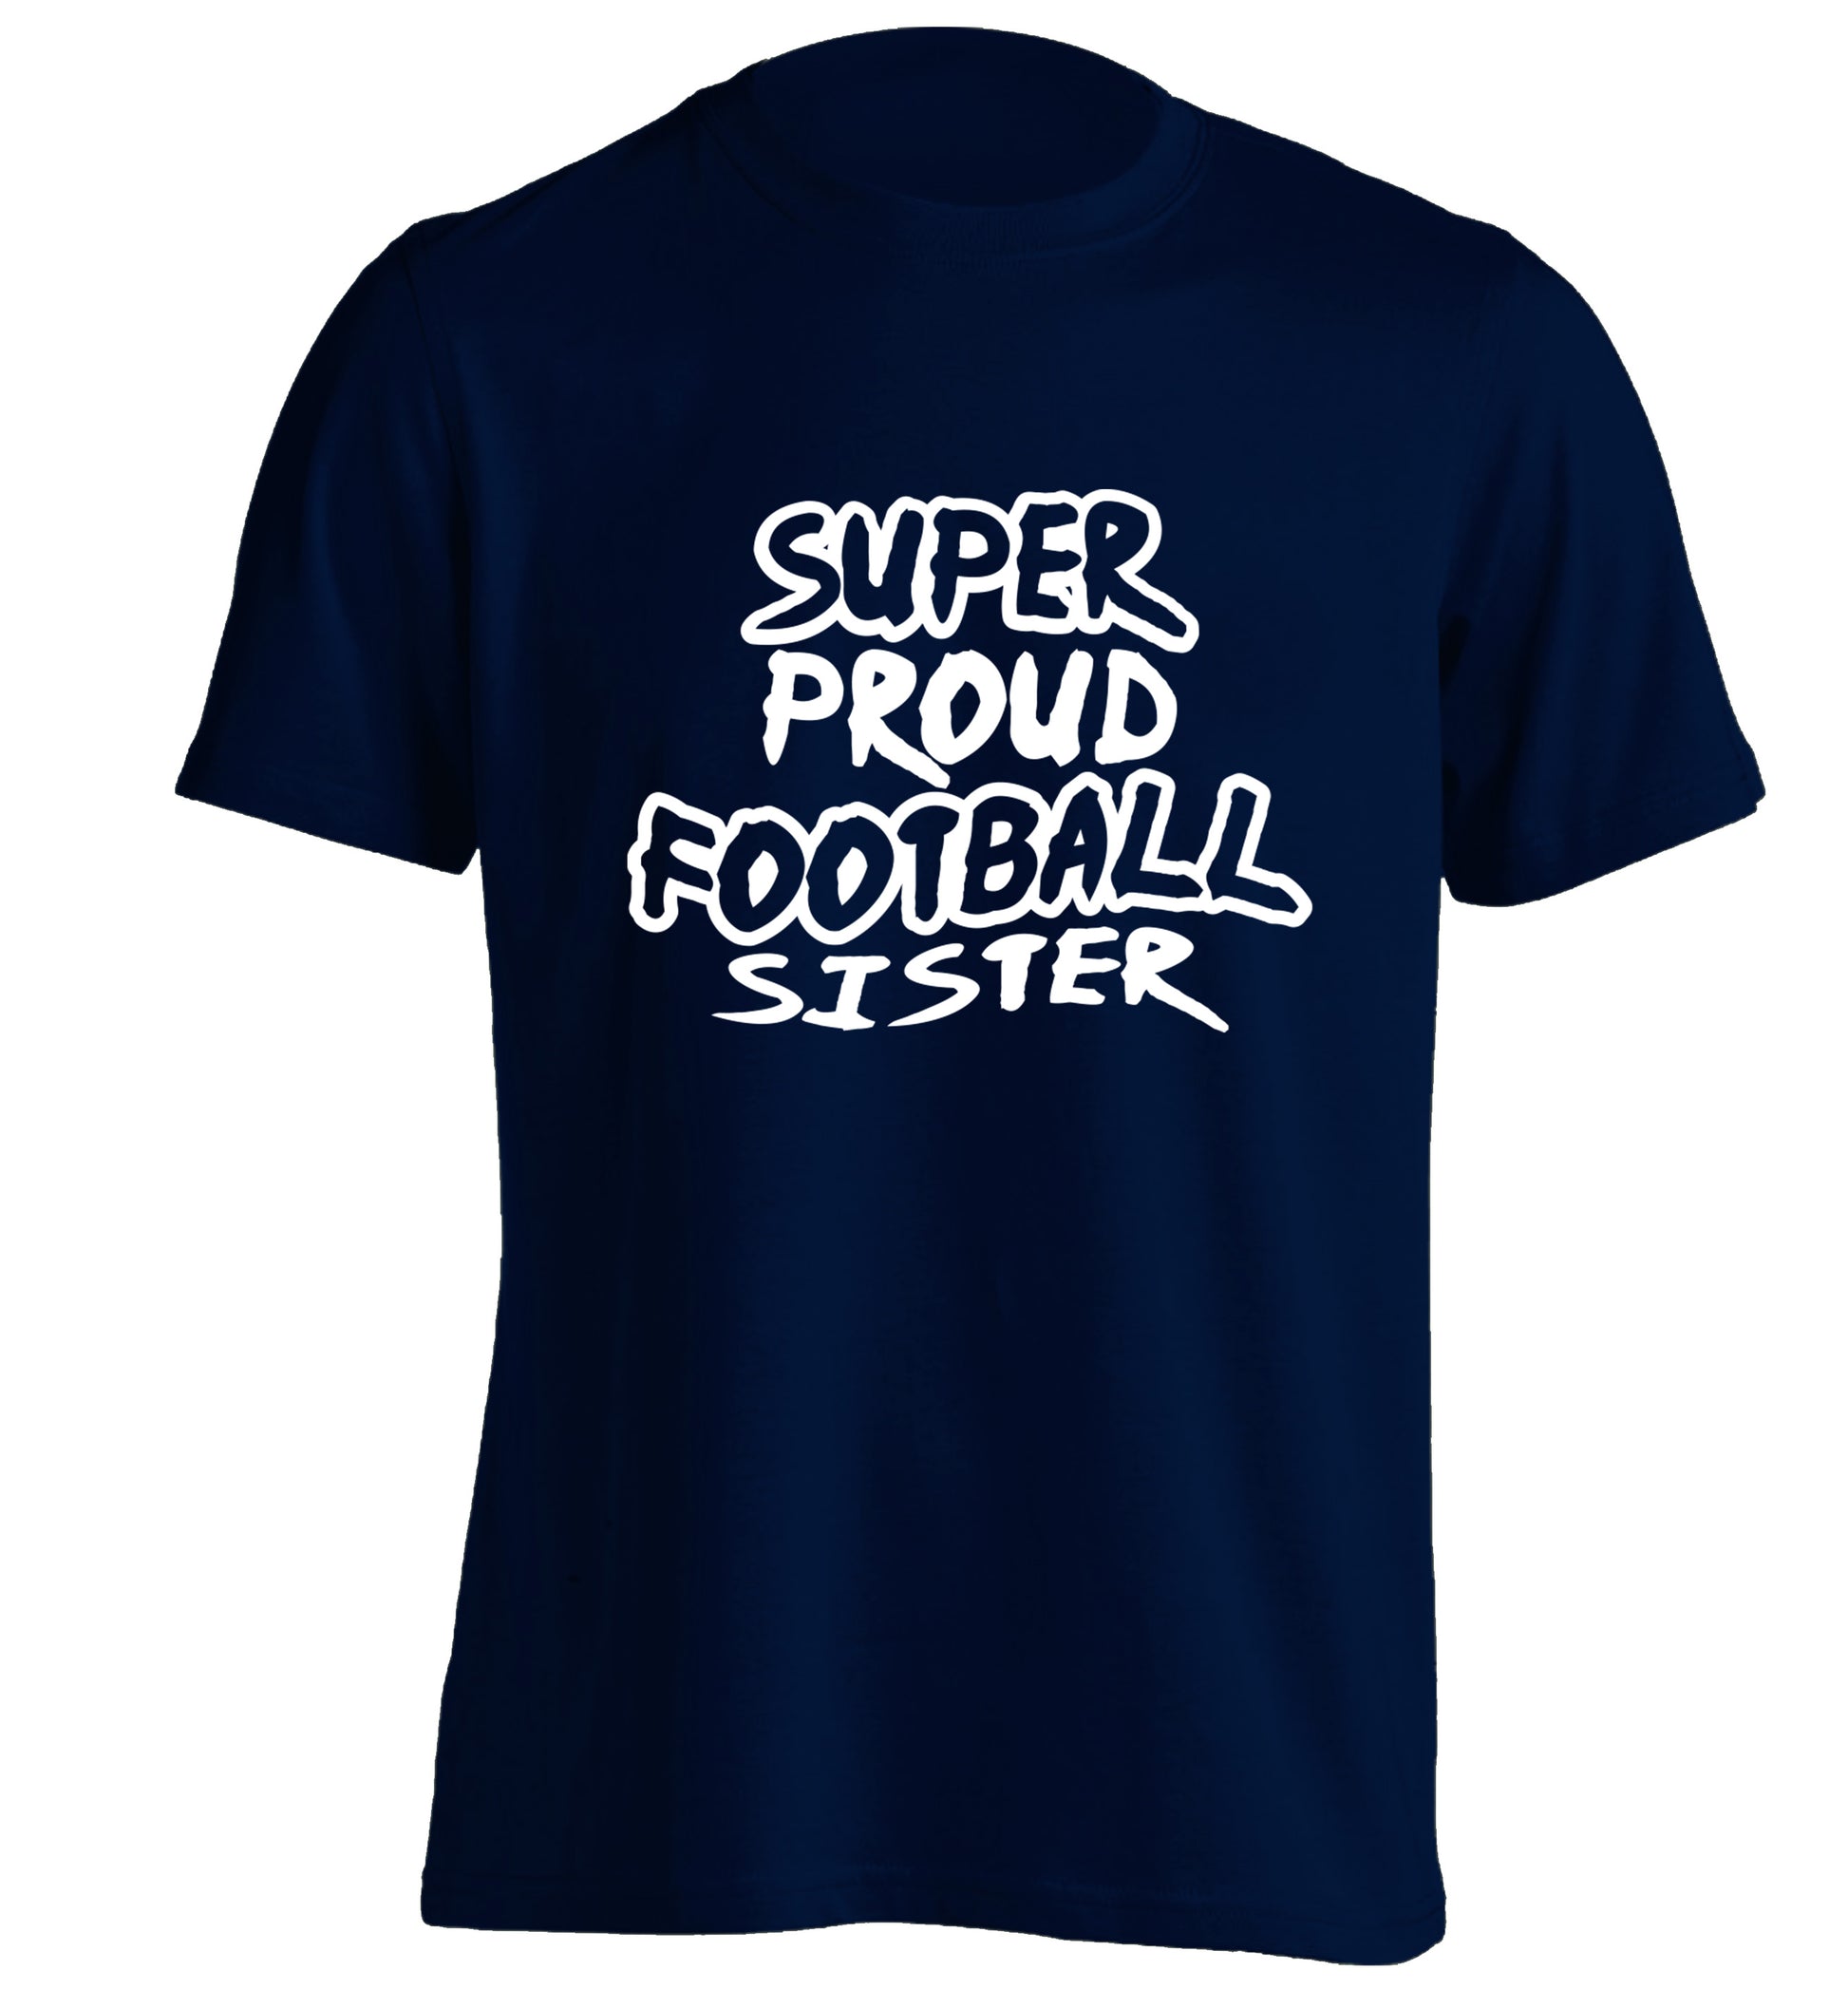 Super proud football sister adults unisexnavy Tshirt 2XL